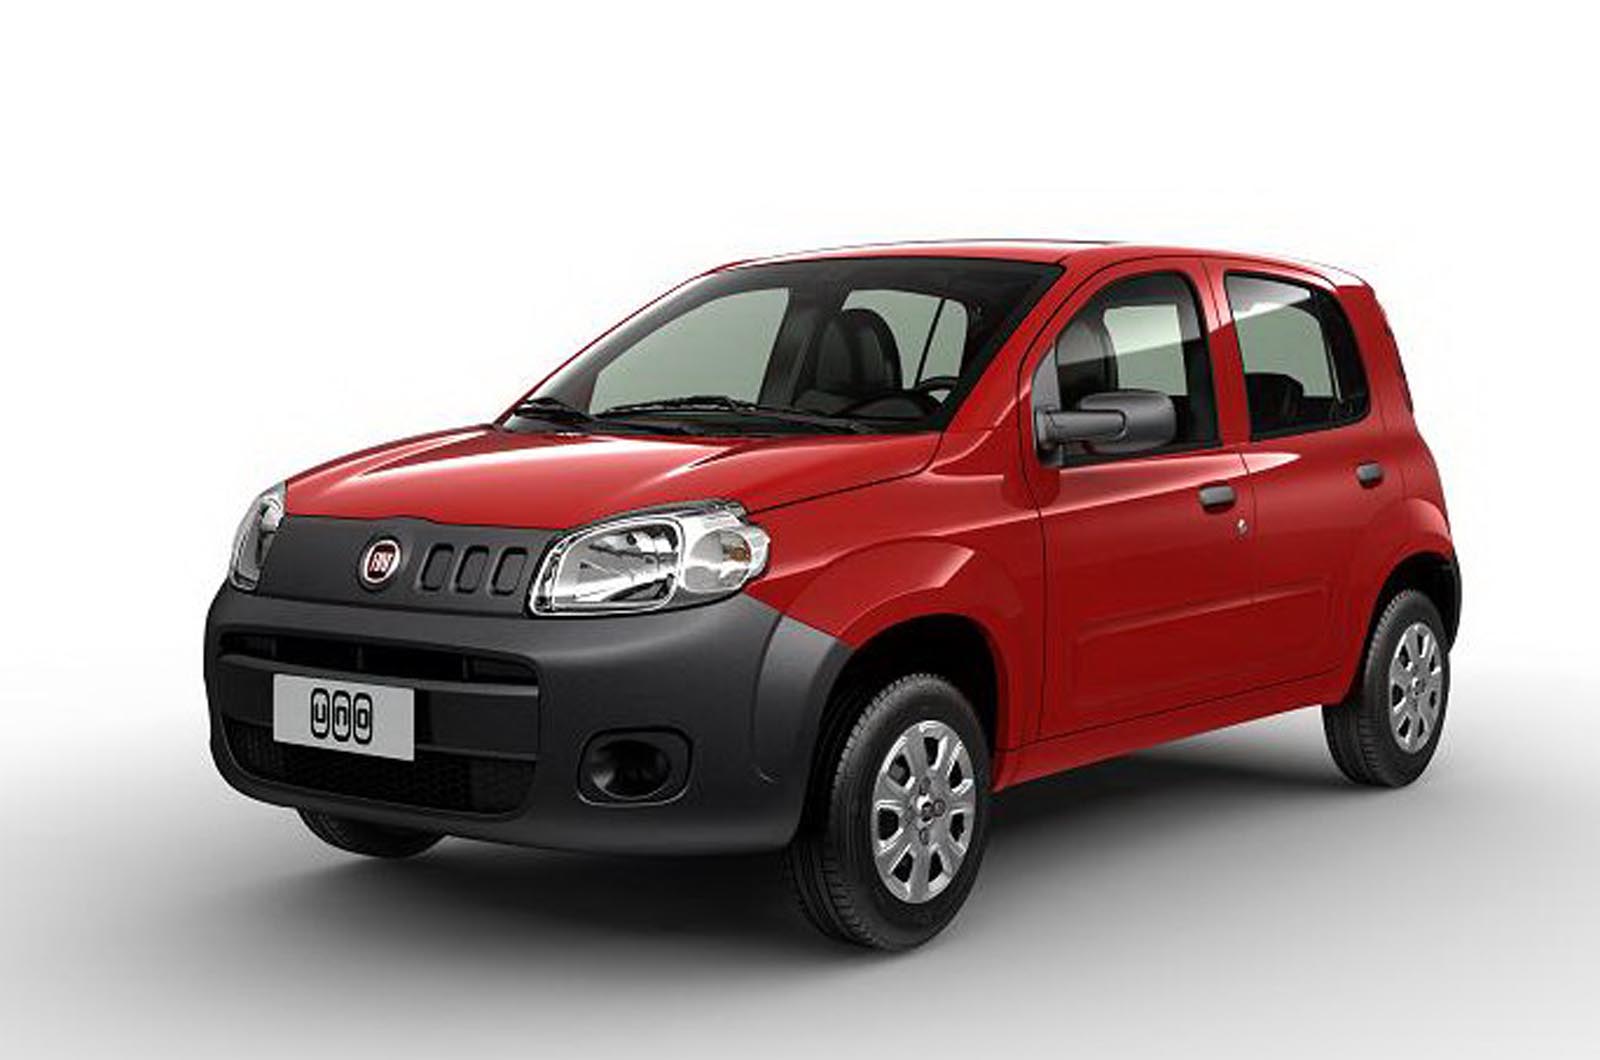 New Fiat Uno revealed